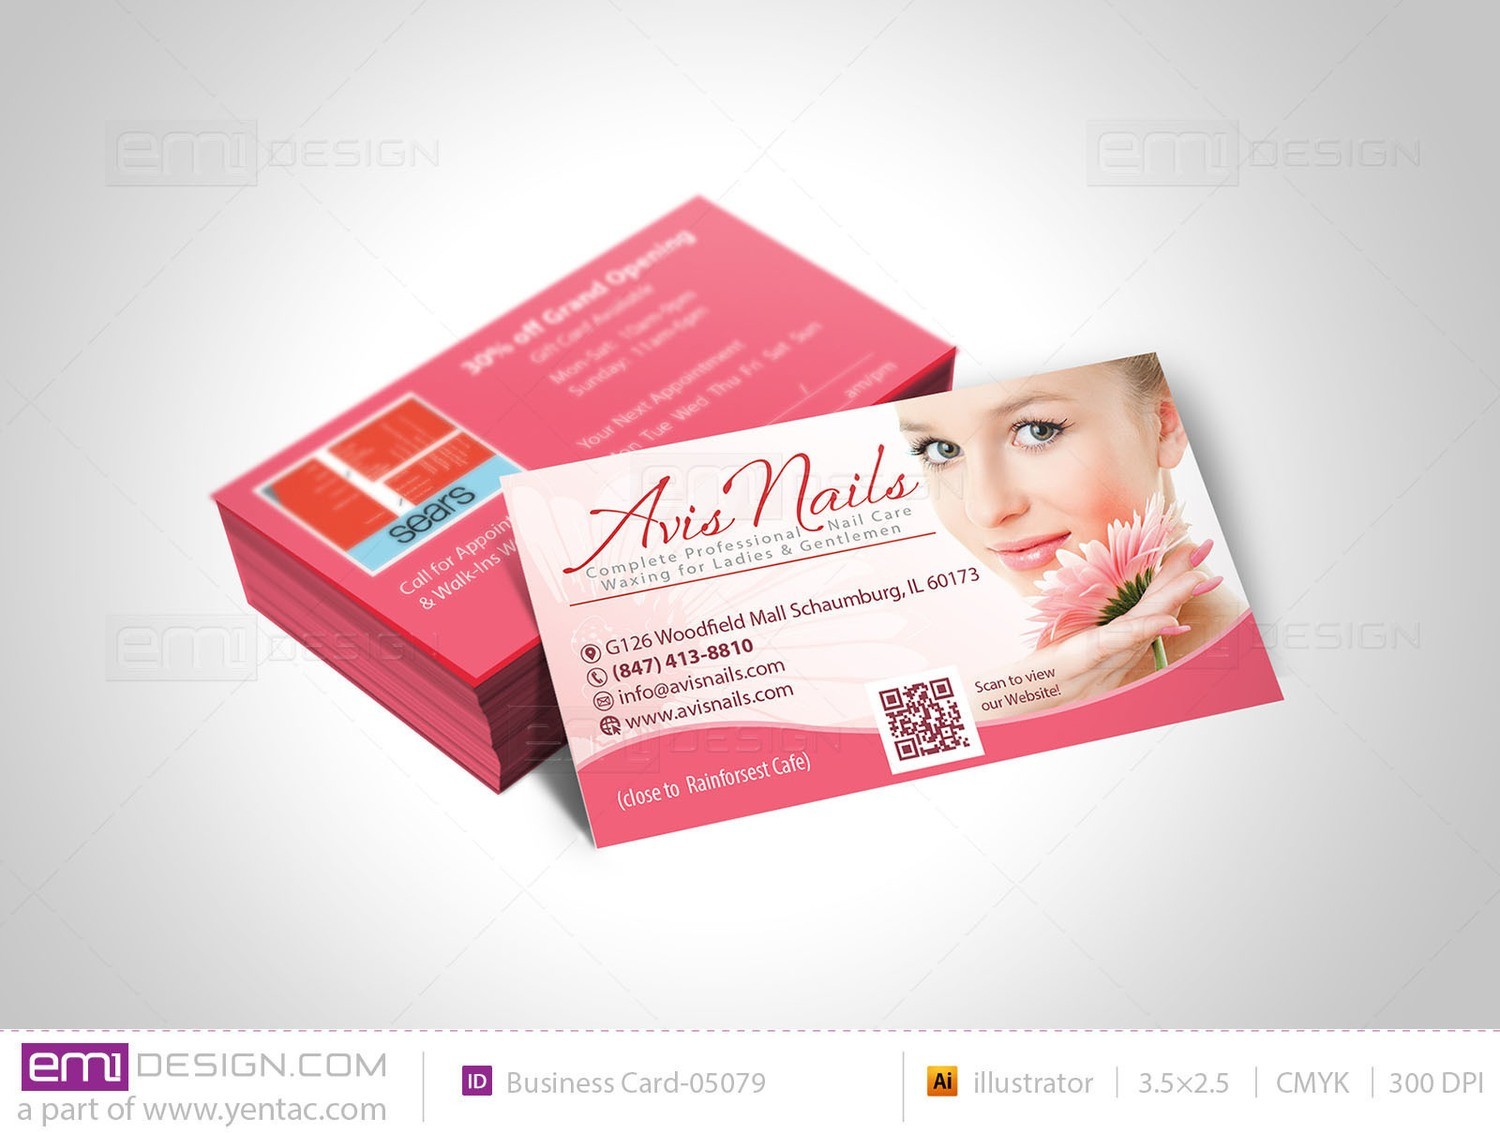 Business Card - Template BusCard-05079 - Avis Nails